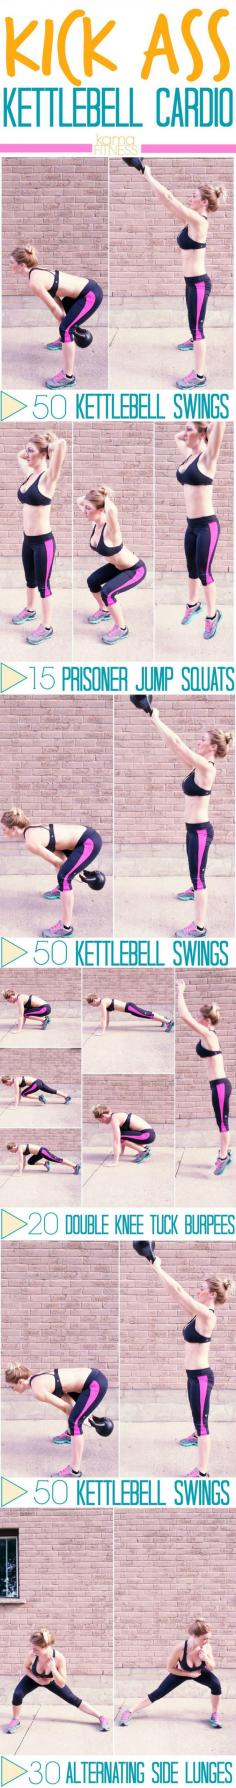 Kick Ass Kettlebell Cardio Workout by Kama Fitness